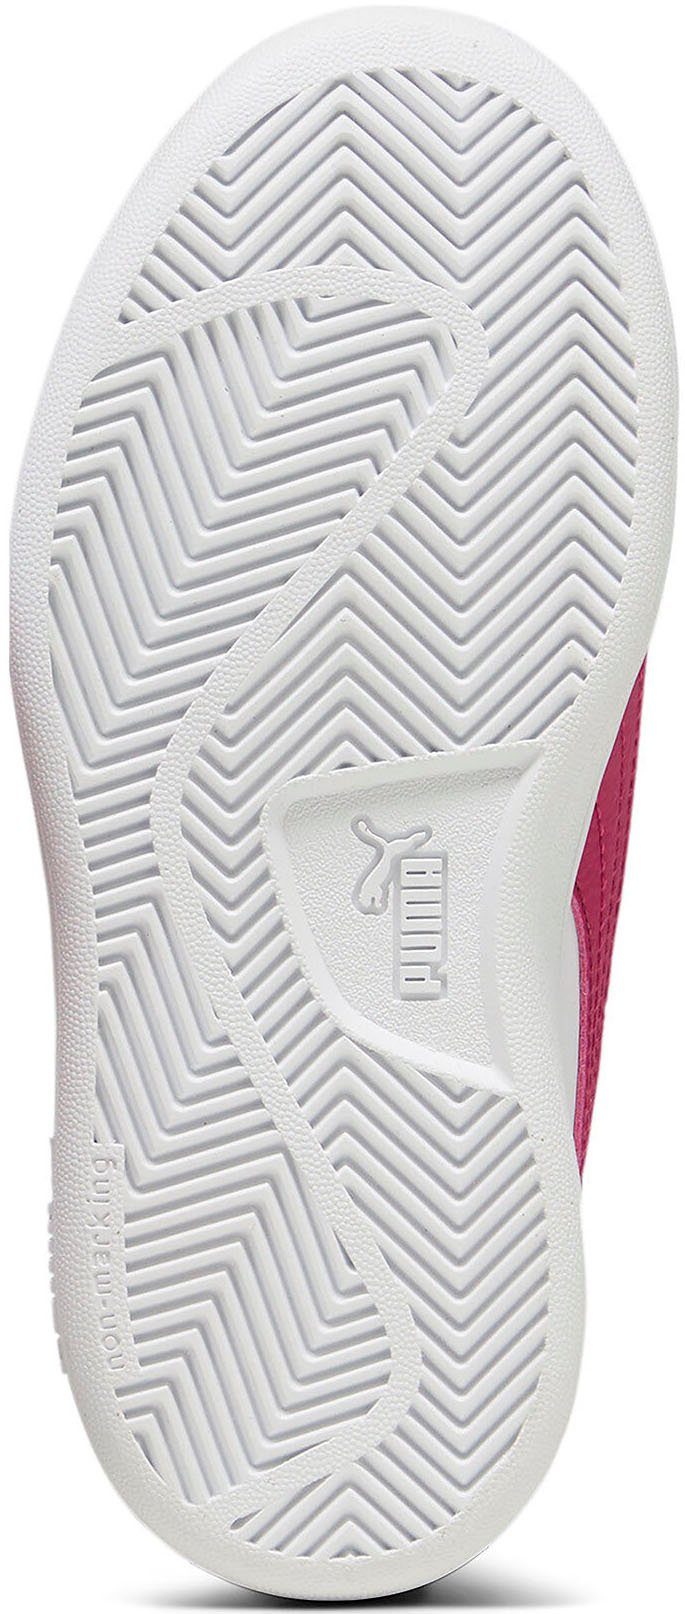 White-Pinktastic PUMA mit SMASH Klettverschluss Sneaker L PUMA 3.0 V PS